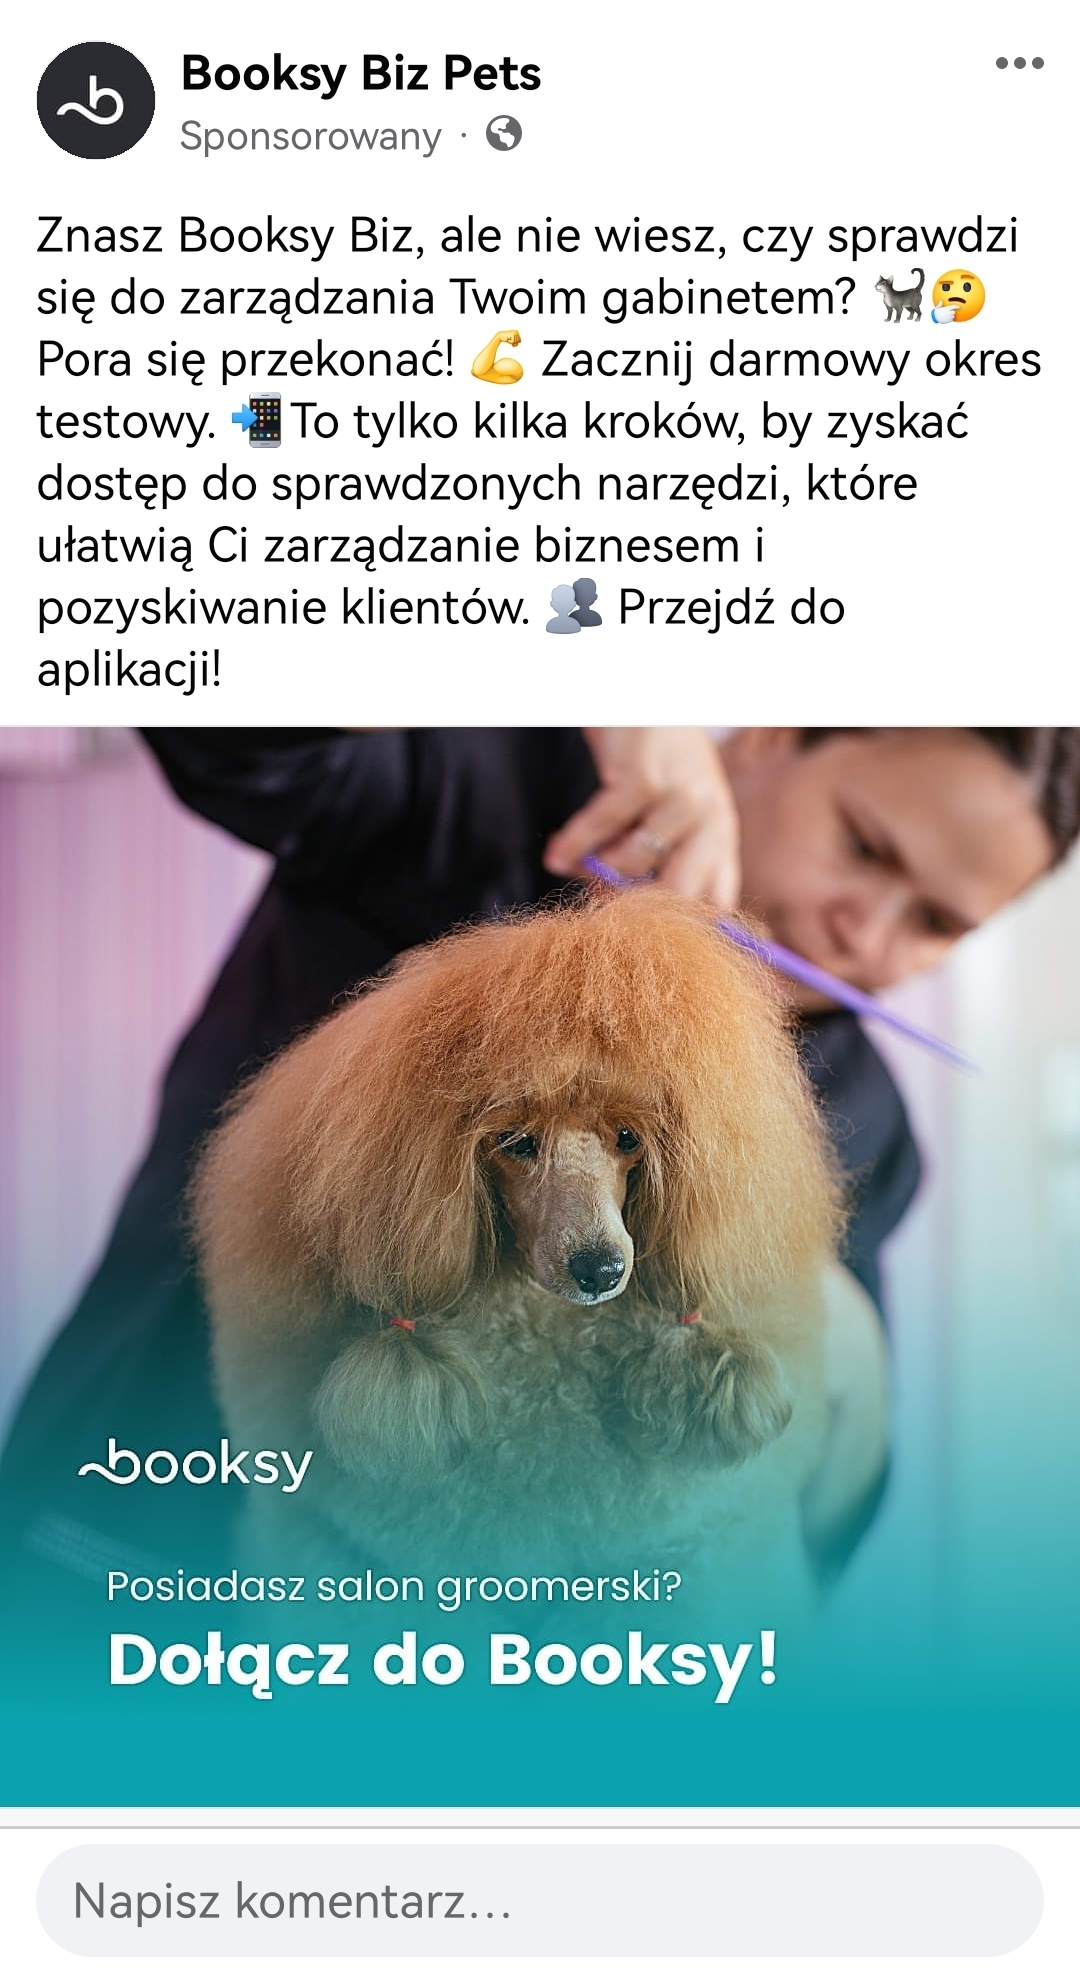 REmarketing Facebook - Booksy Biz Pets